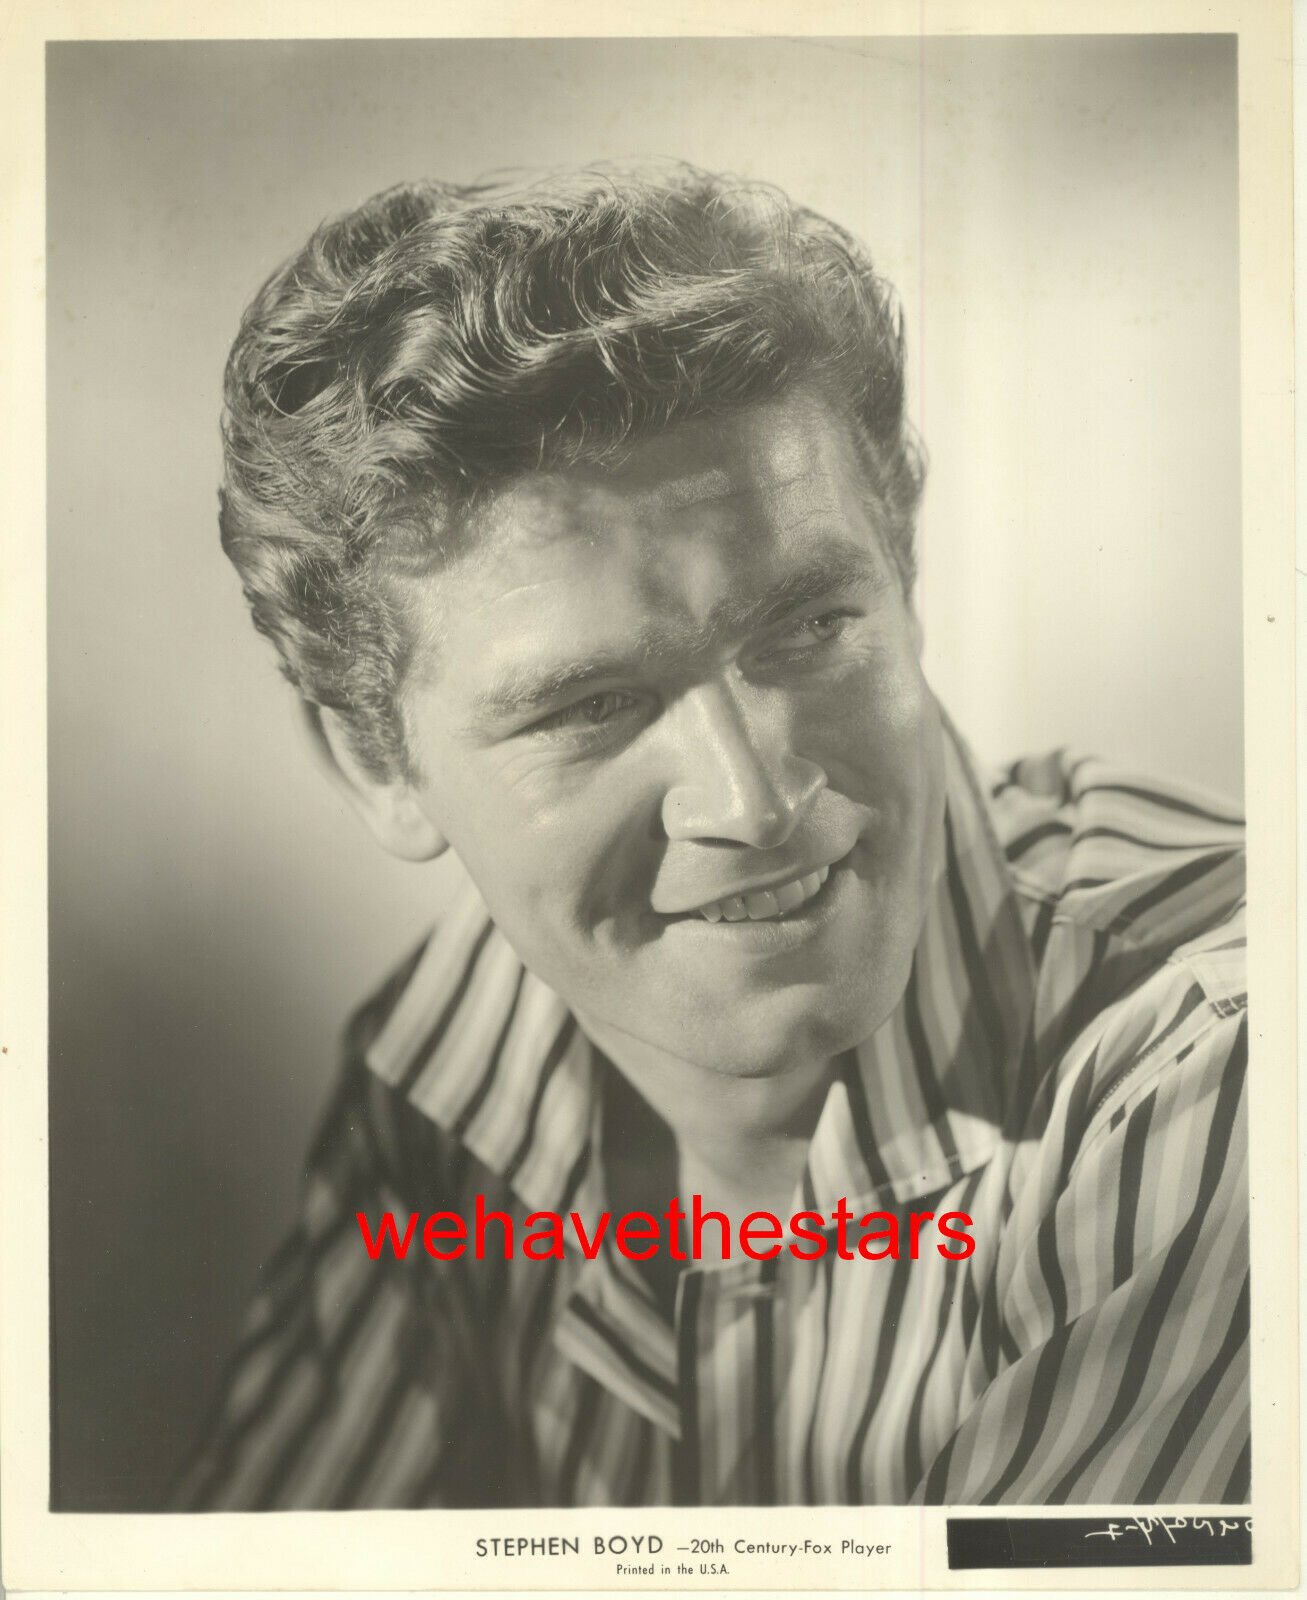 Vintage Stephen Boyd Quite Handsome '59 Publicity Portrait